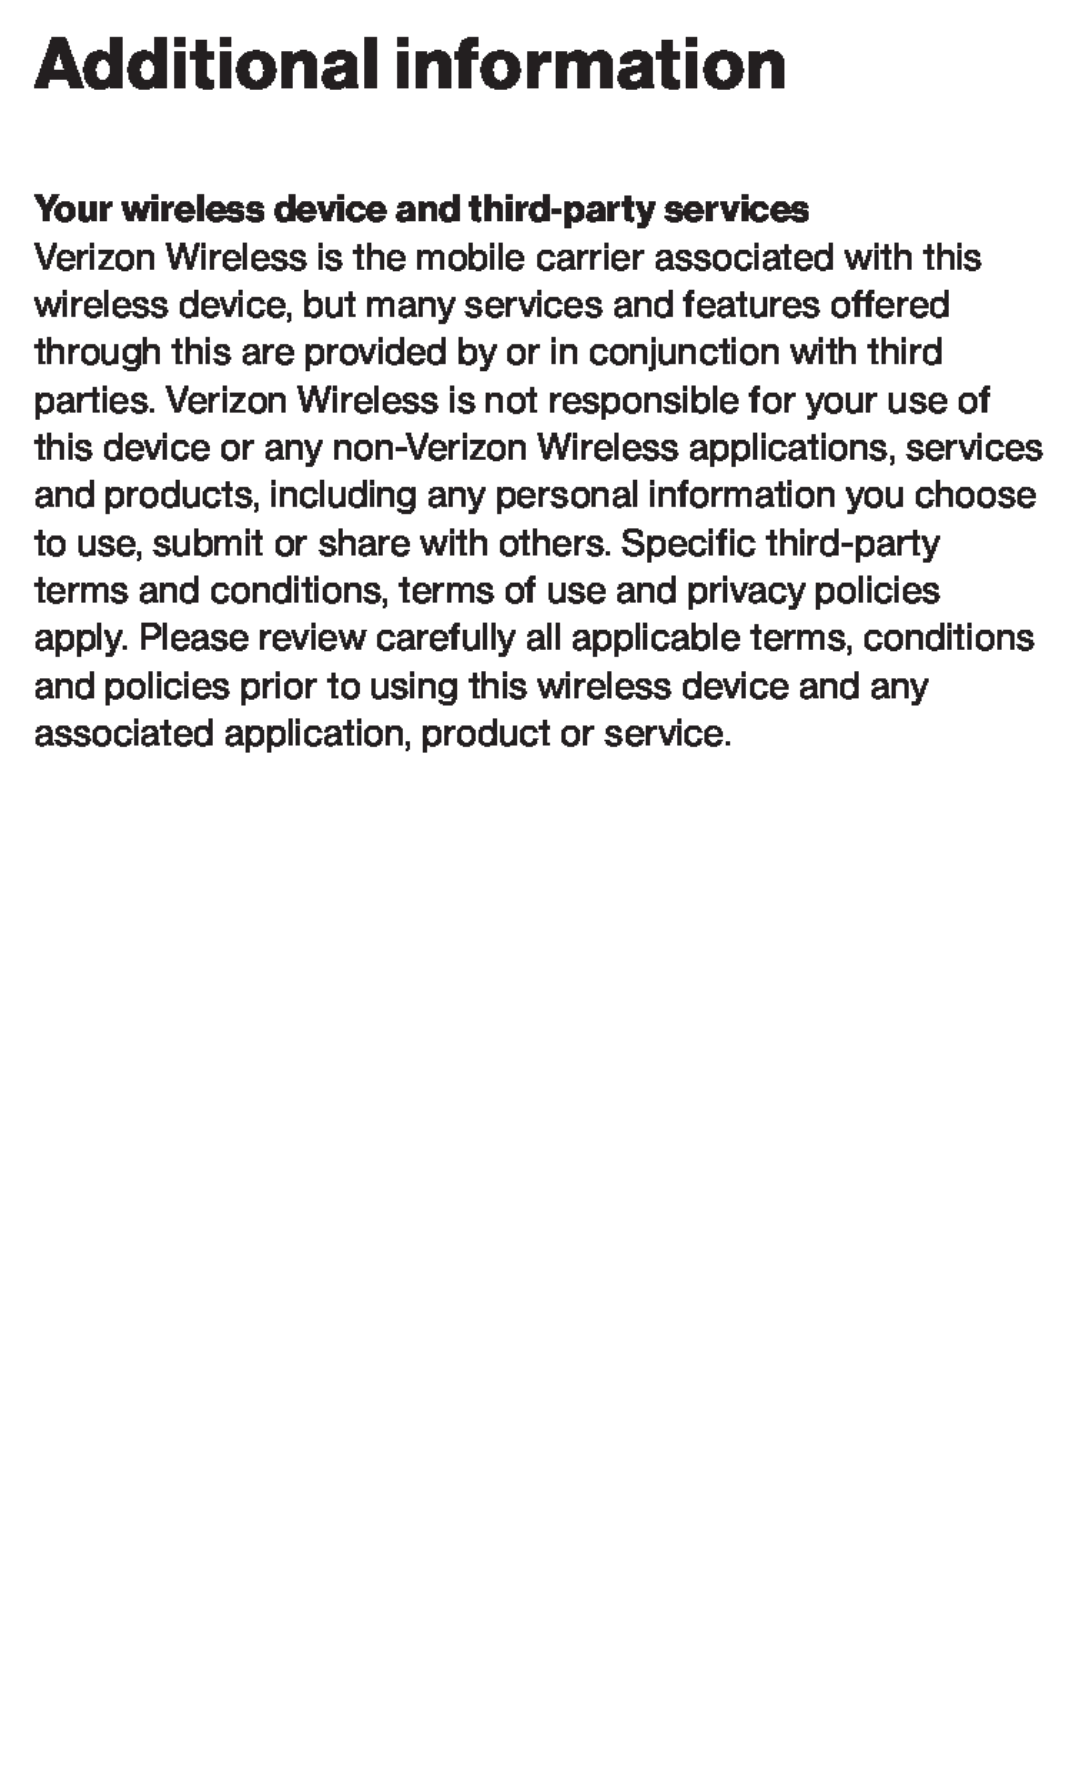 Additional information Galaxy Tab A 8.4 Verizon